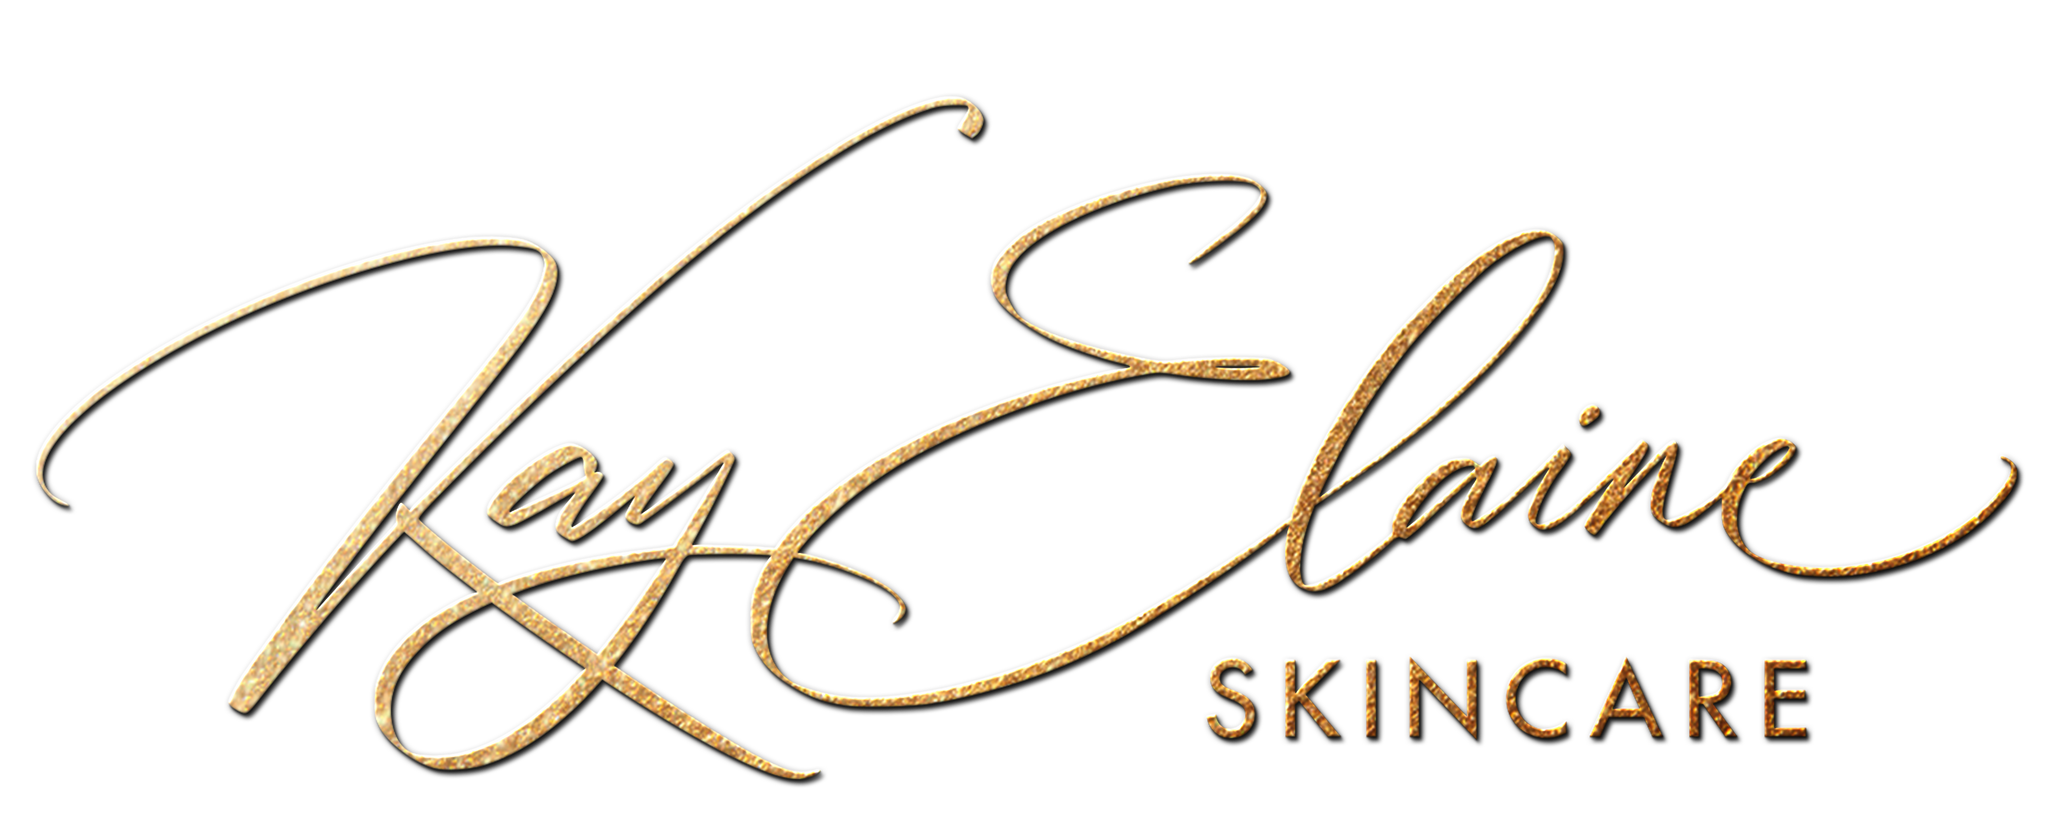 Kay Elaine Skincare